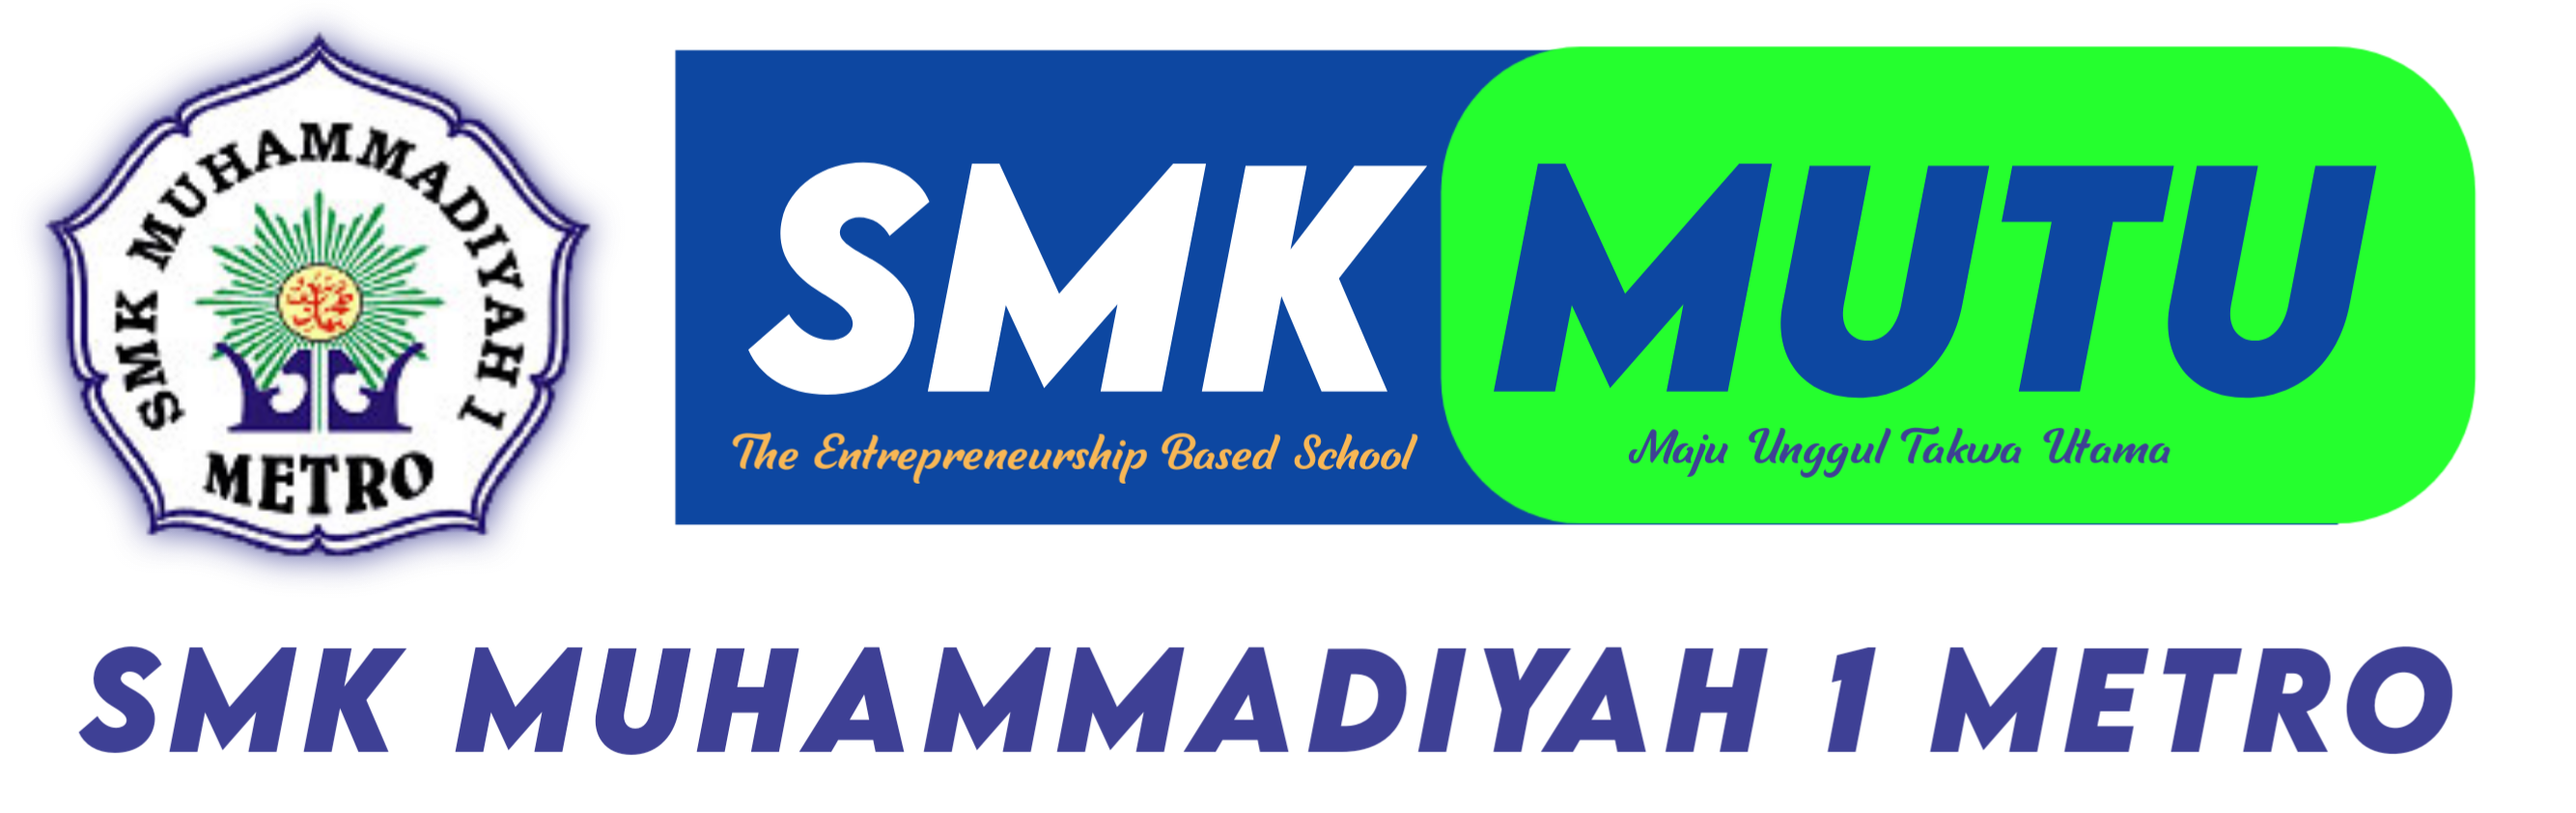 SMK MUHAMMADIYAH 1 METRO